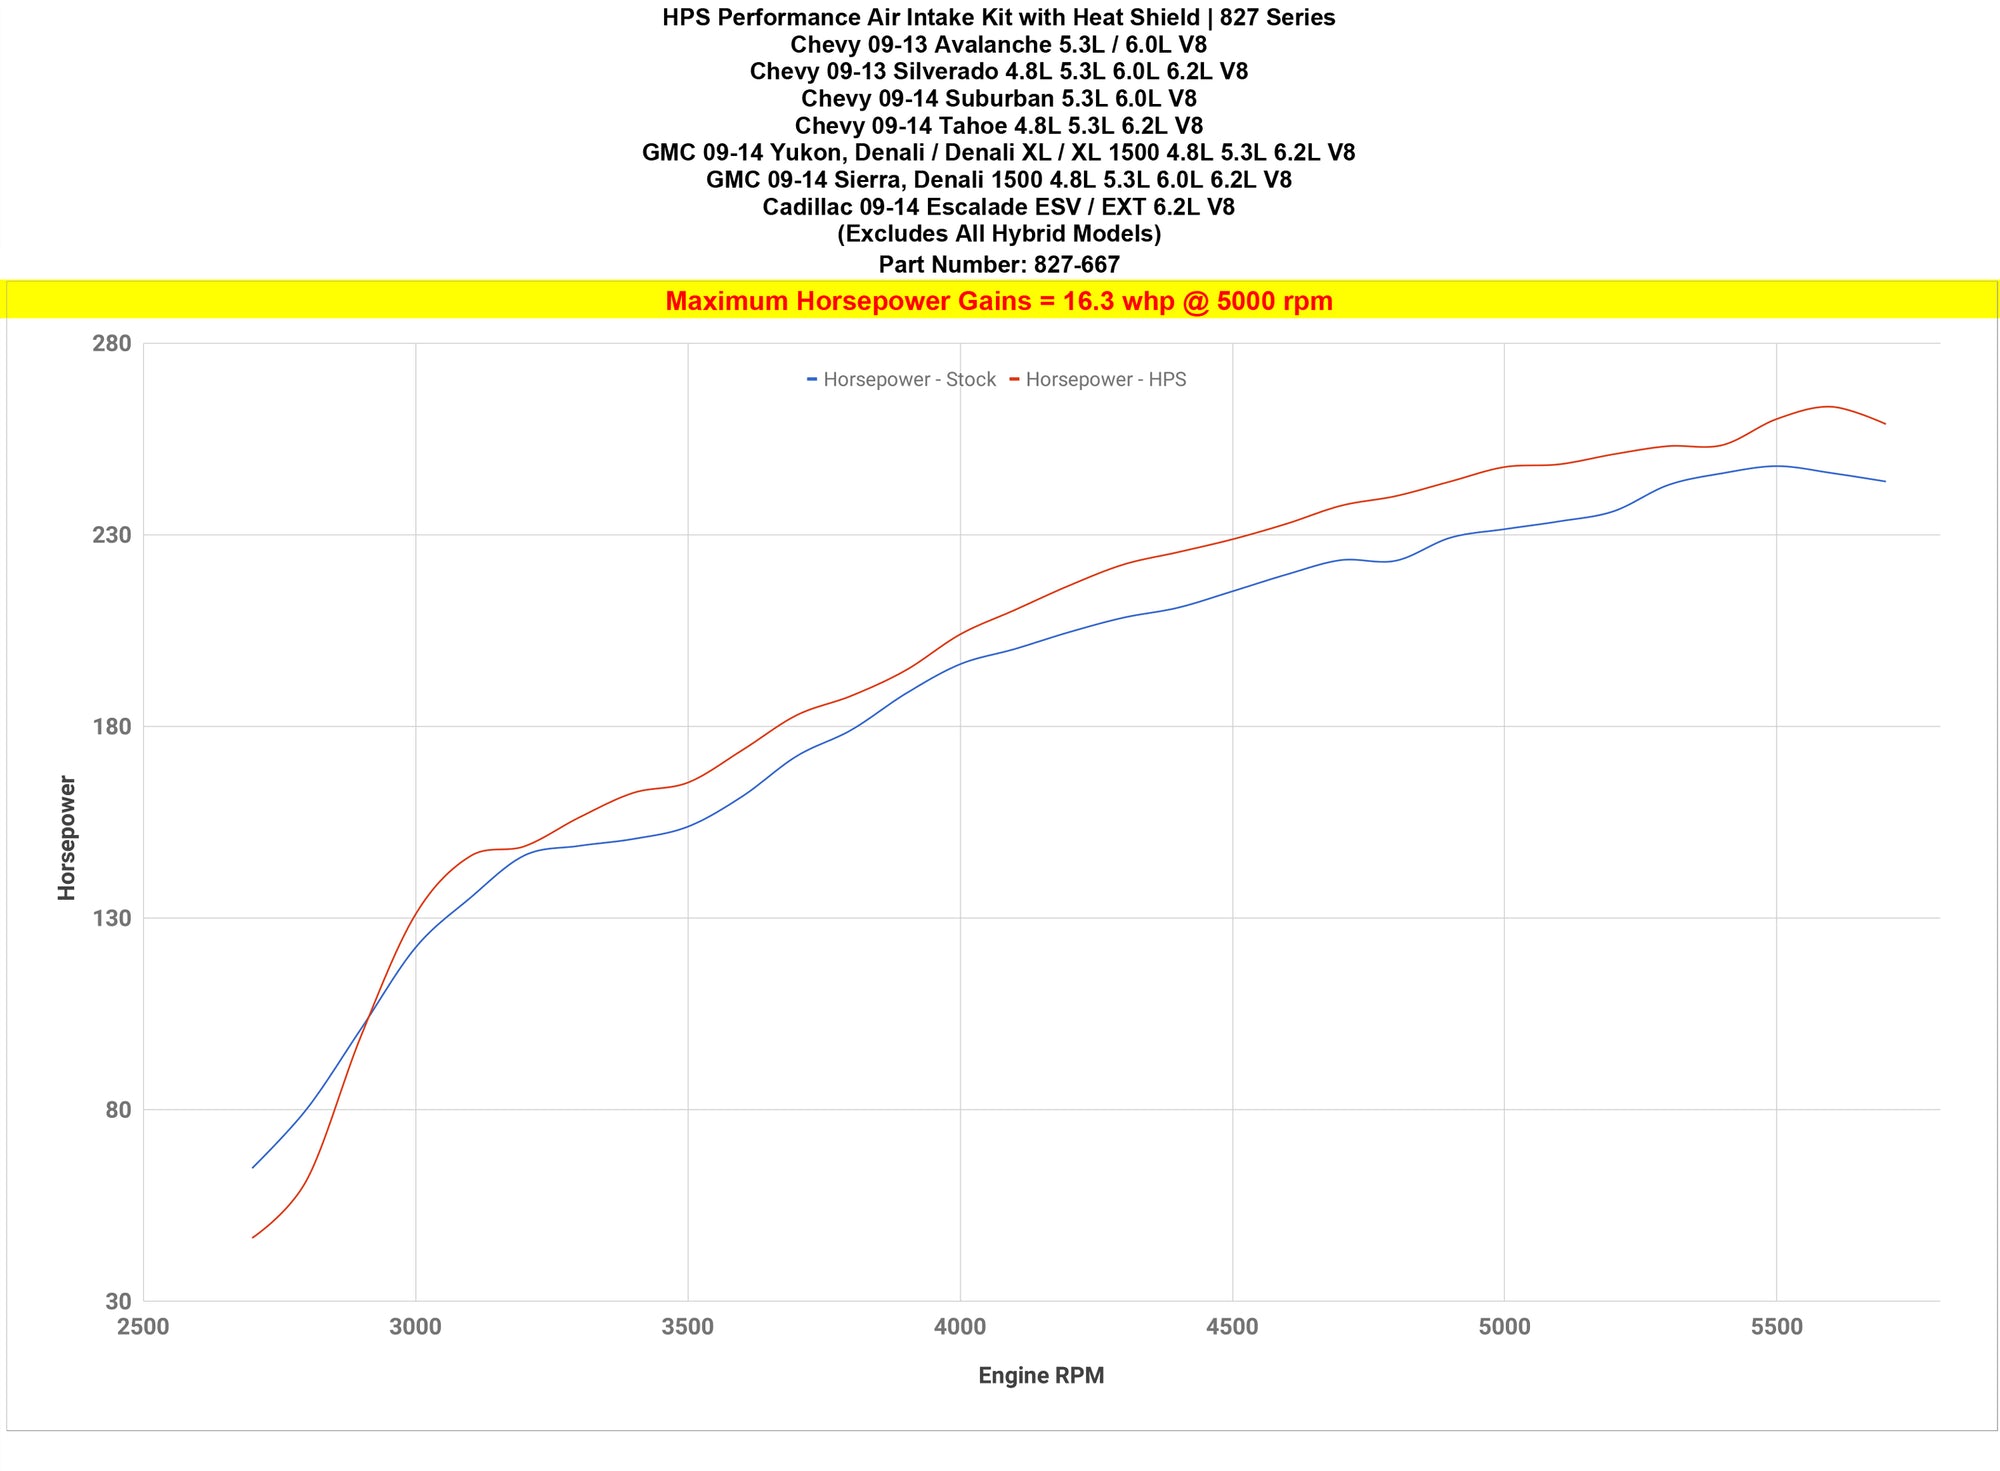 Dyno proven gains 16.3 whp HPS Performance Shortram Air Intake Kit 2009-2014 Chevy Suburban 5.3L V8 827-667R